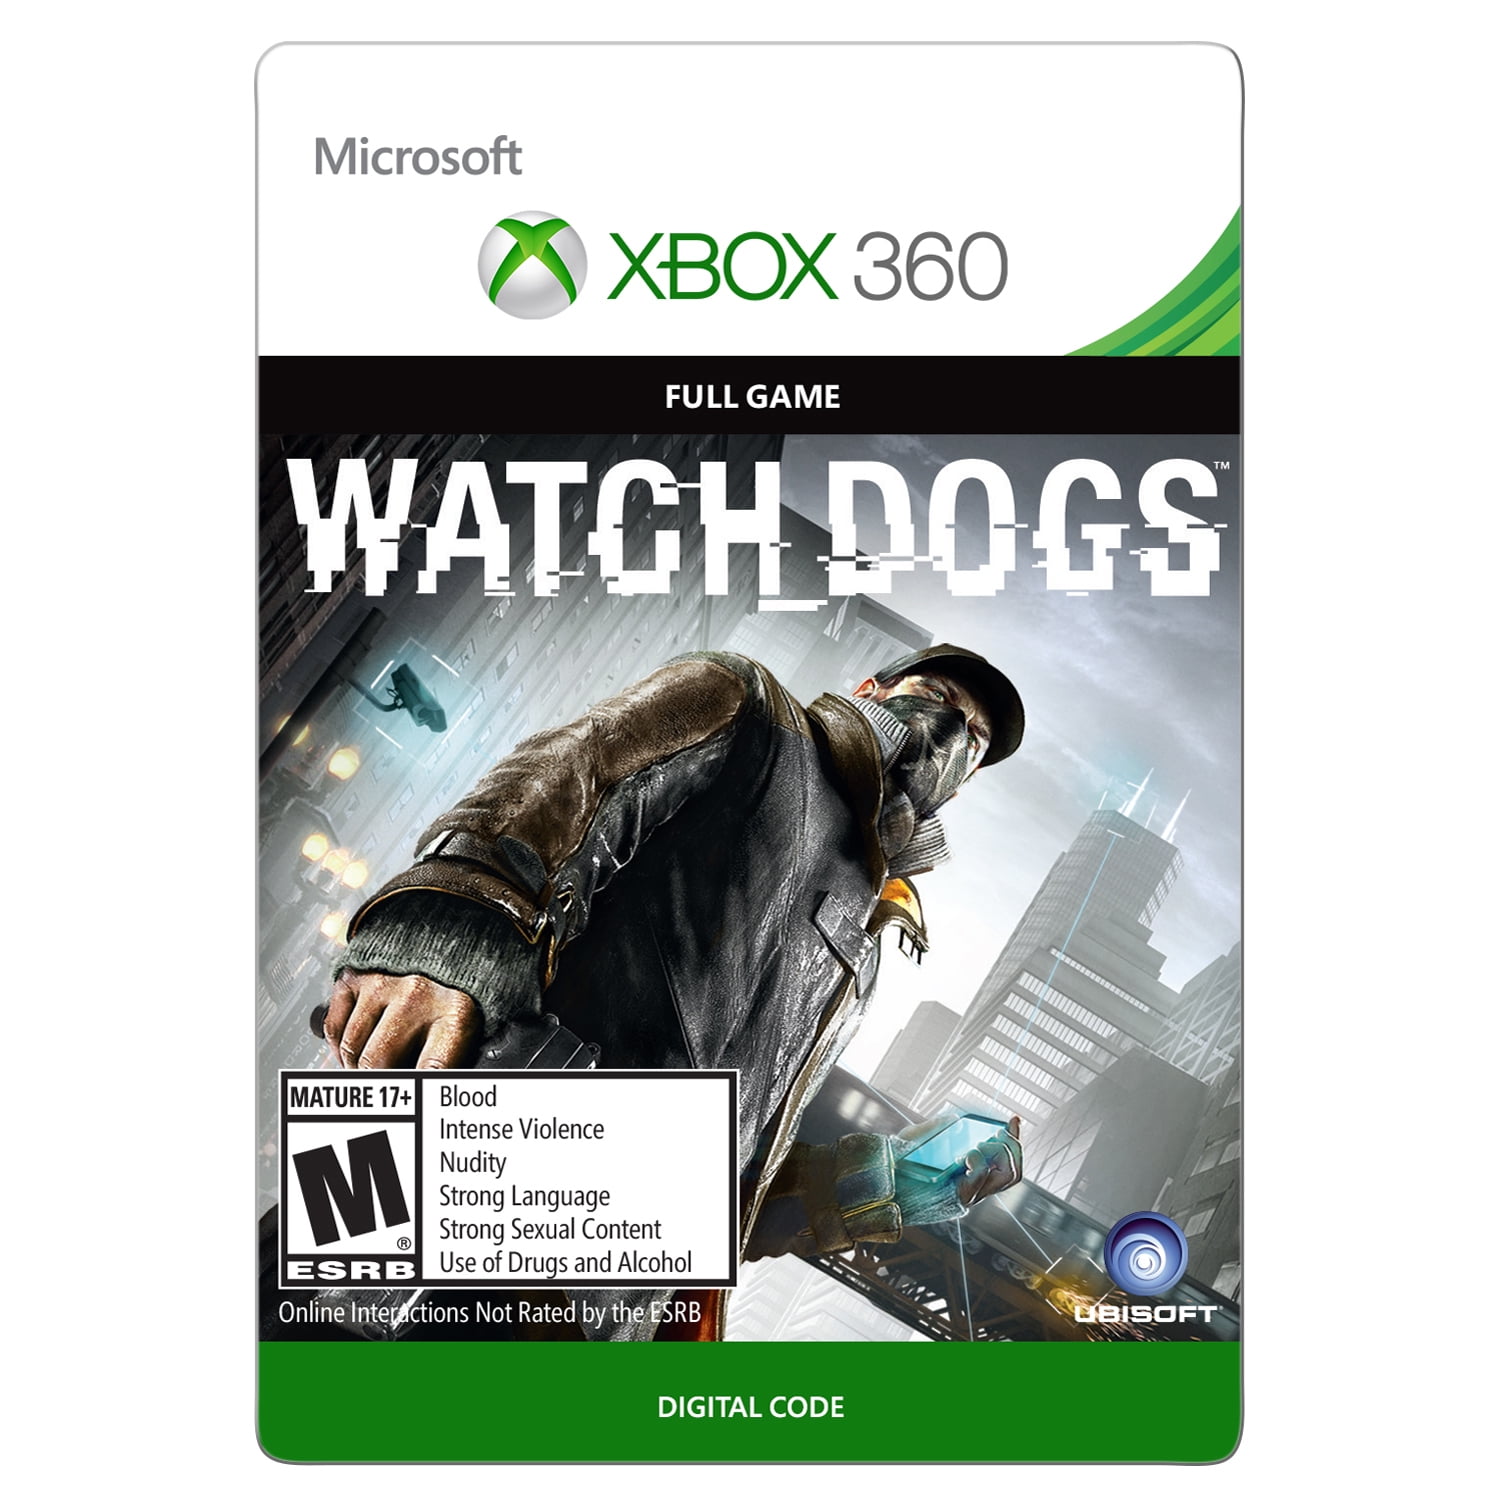 Jogo Watch Dogs Signature Edition XBox 360 Midia Fisica